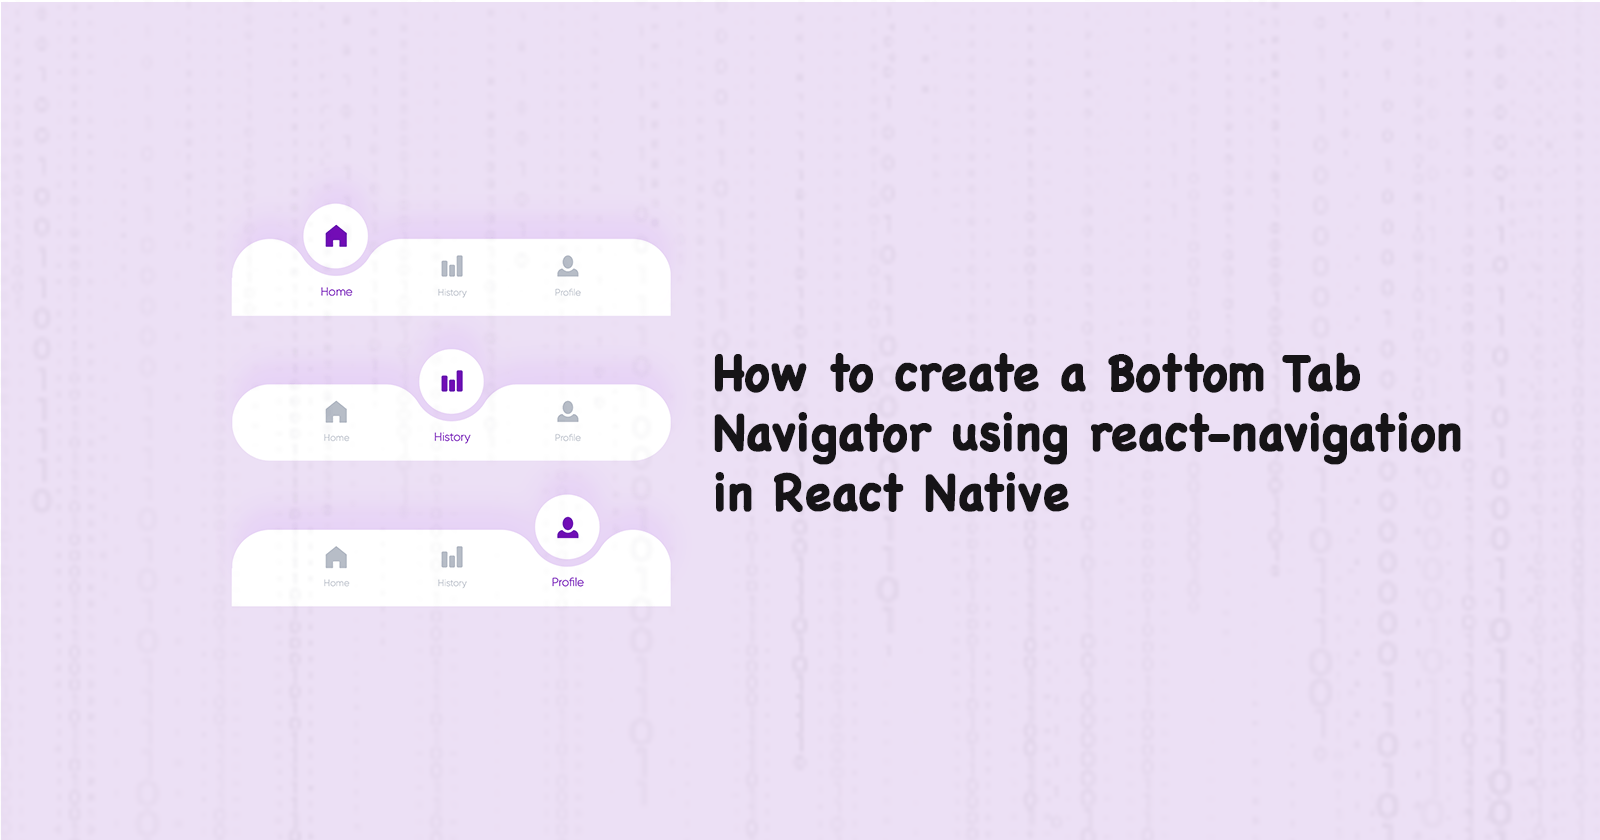 How to create a Bottom Tab Navigator using react-navigation in React Native